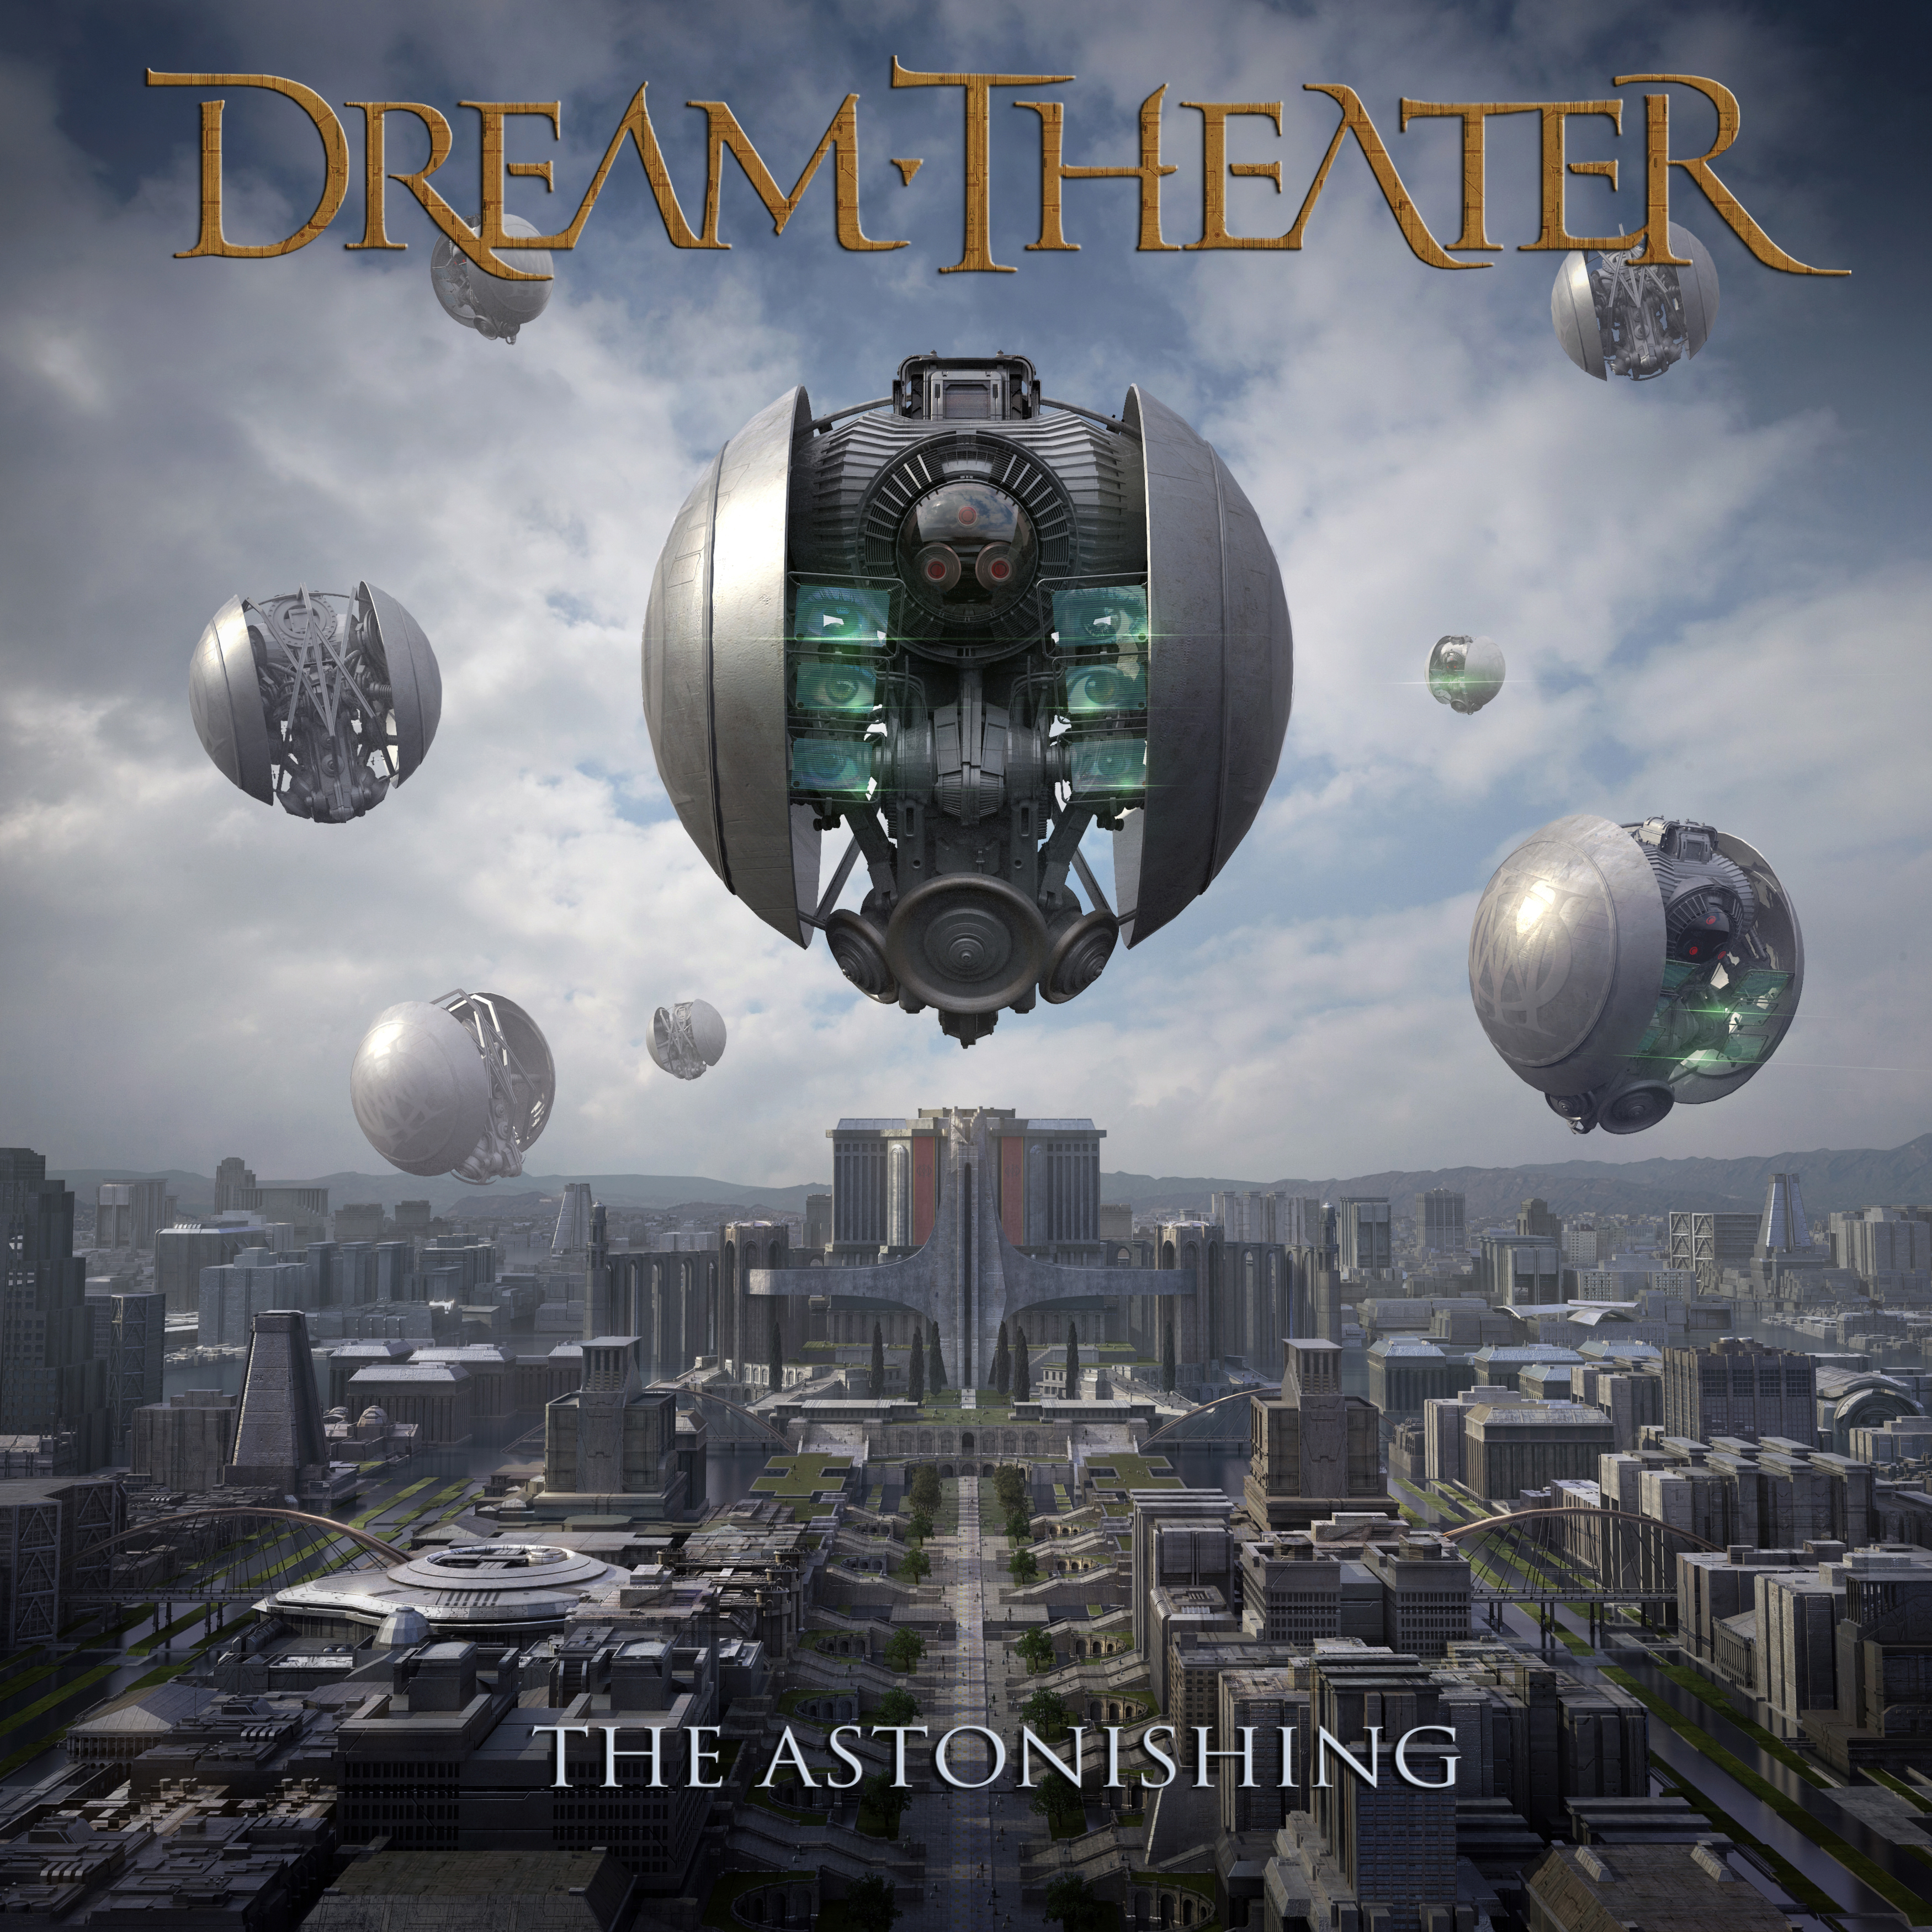 Dream Theater's The Astonishing